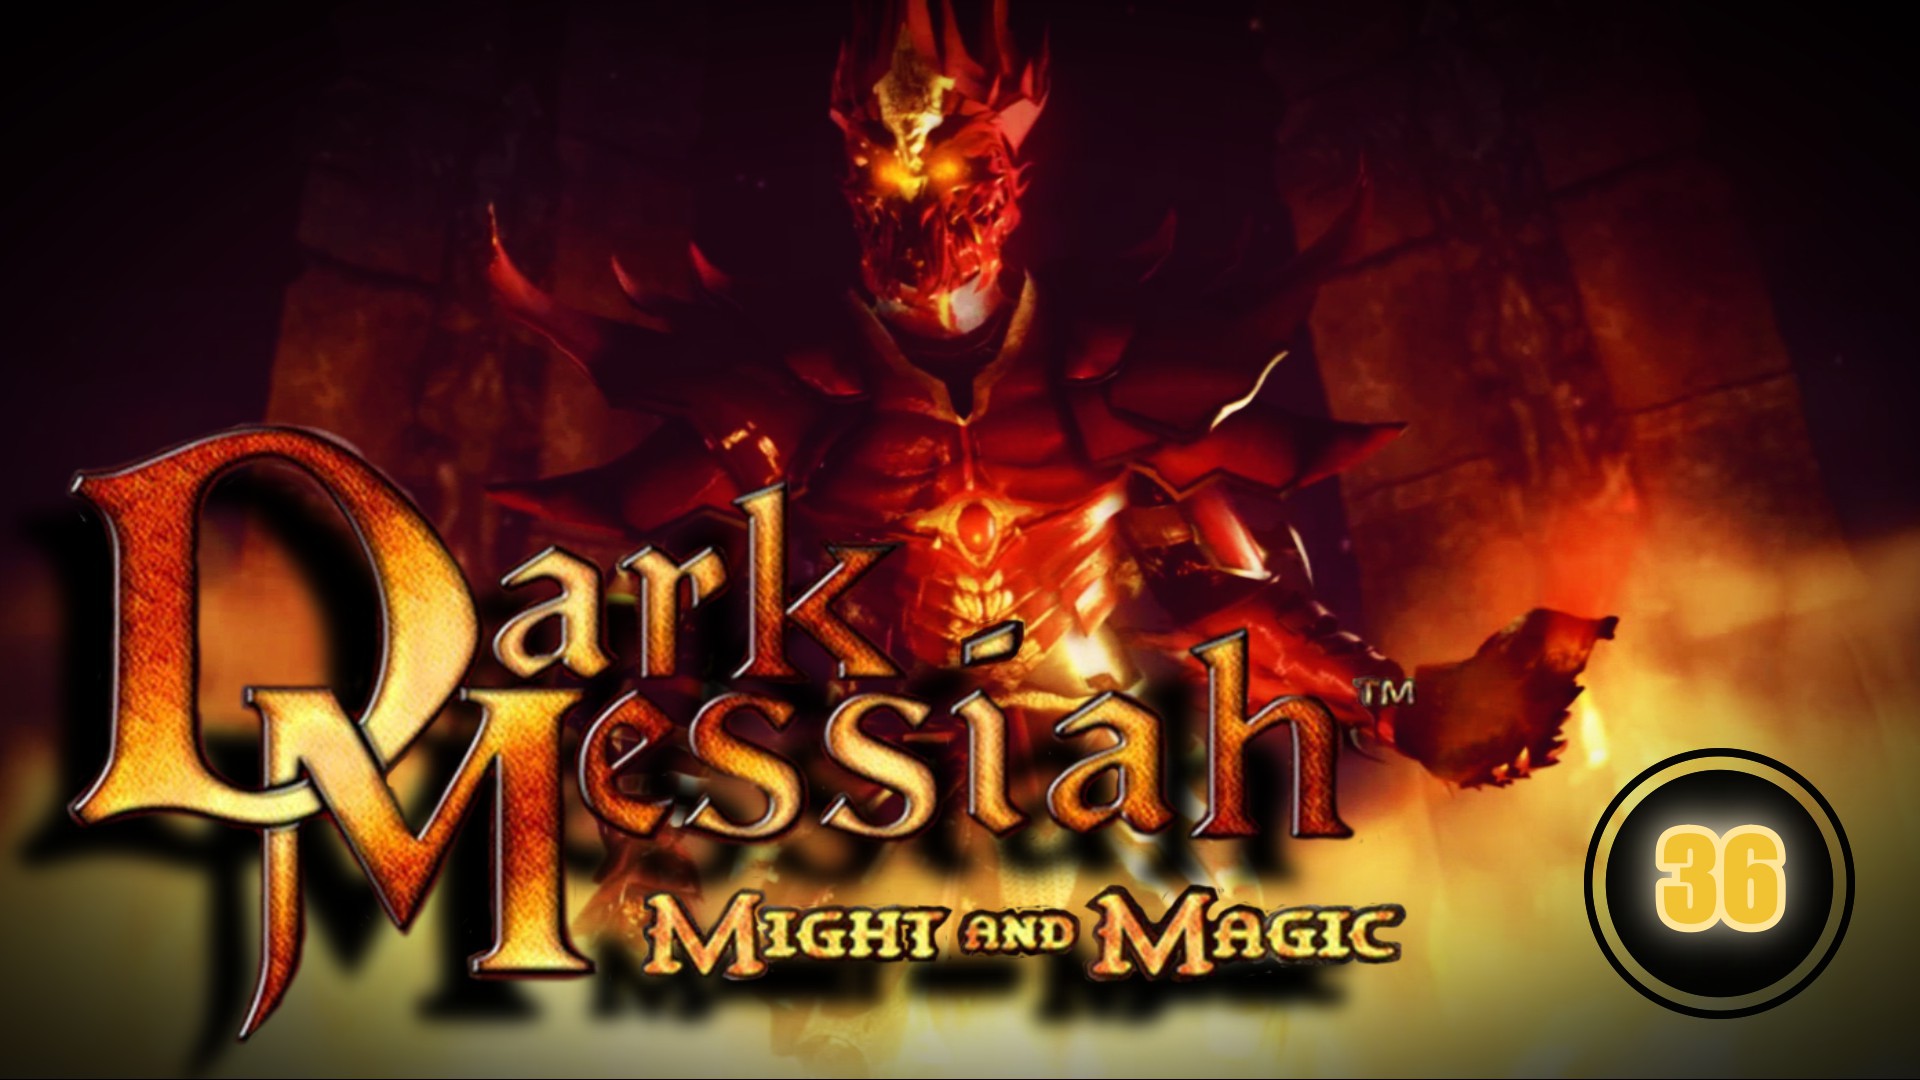 Dark Messiah of Might and Magic 36